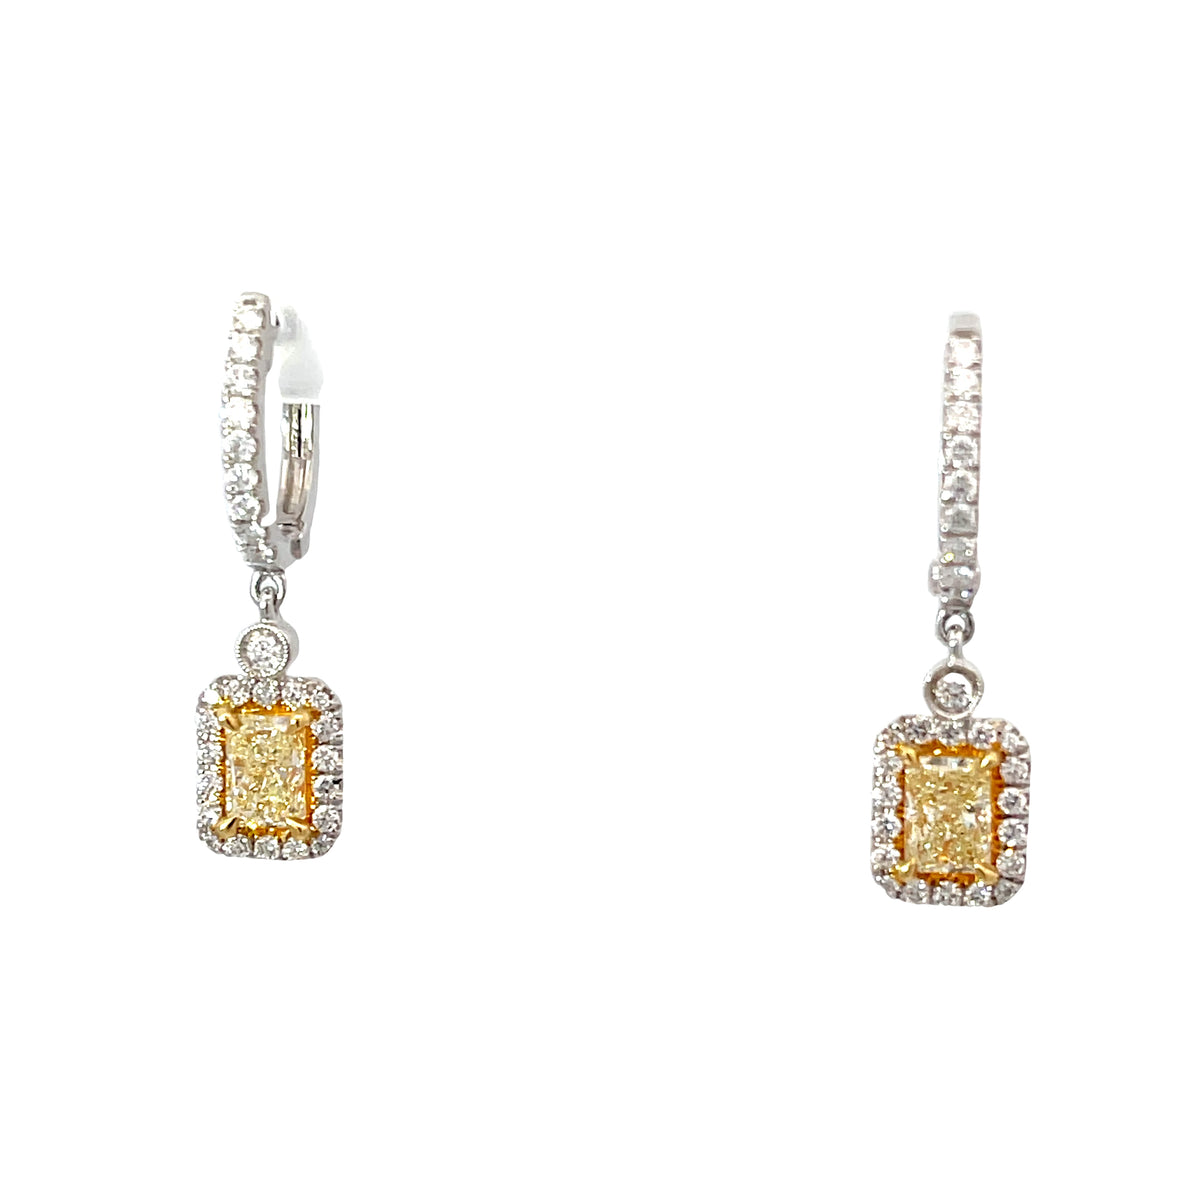 Ladies 18k Two Tone Yellow and White Diamond earrings